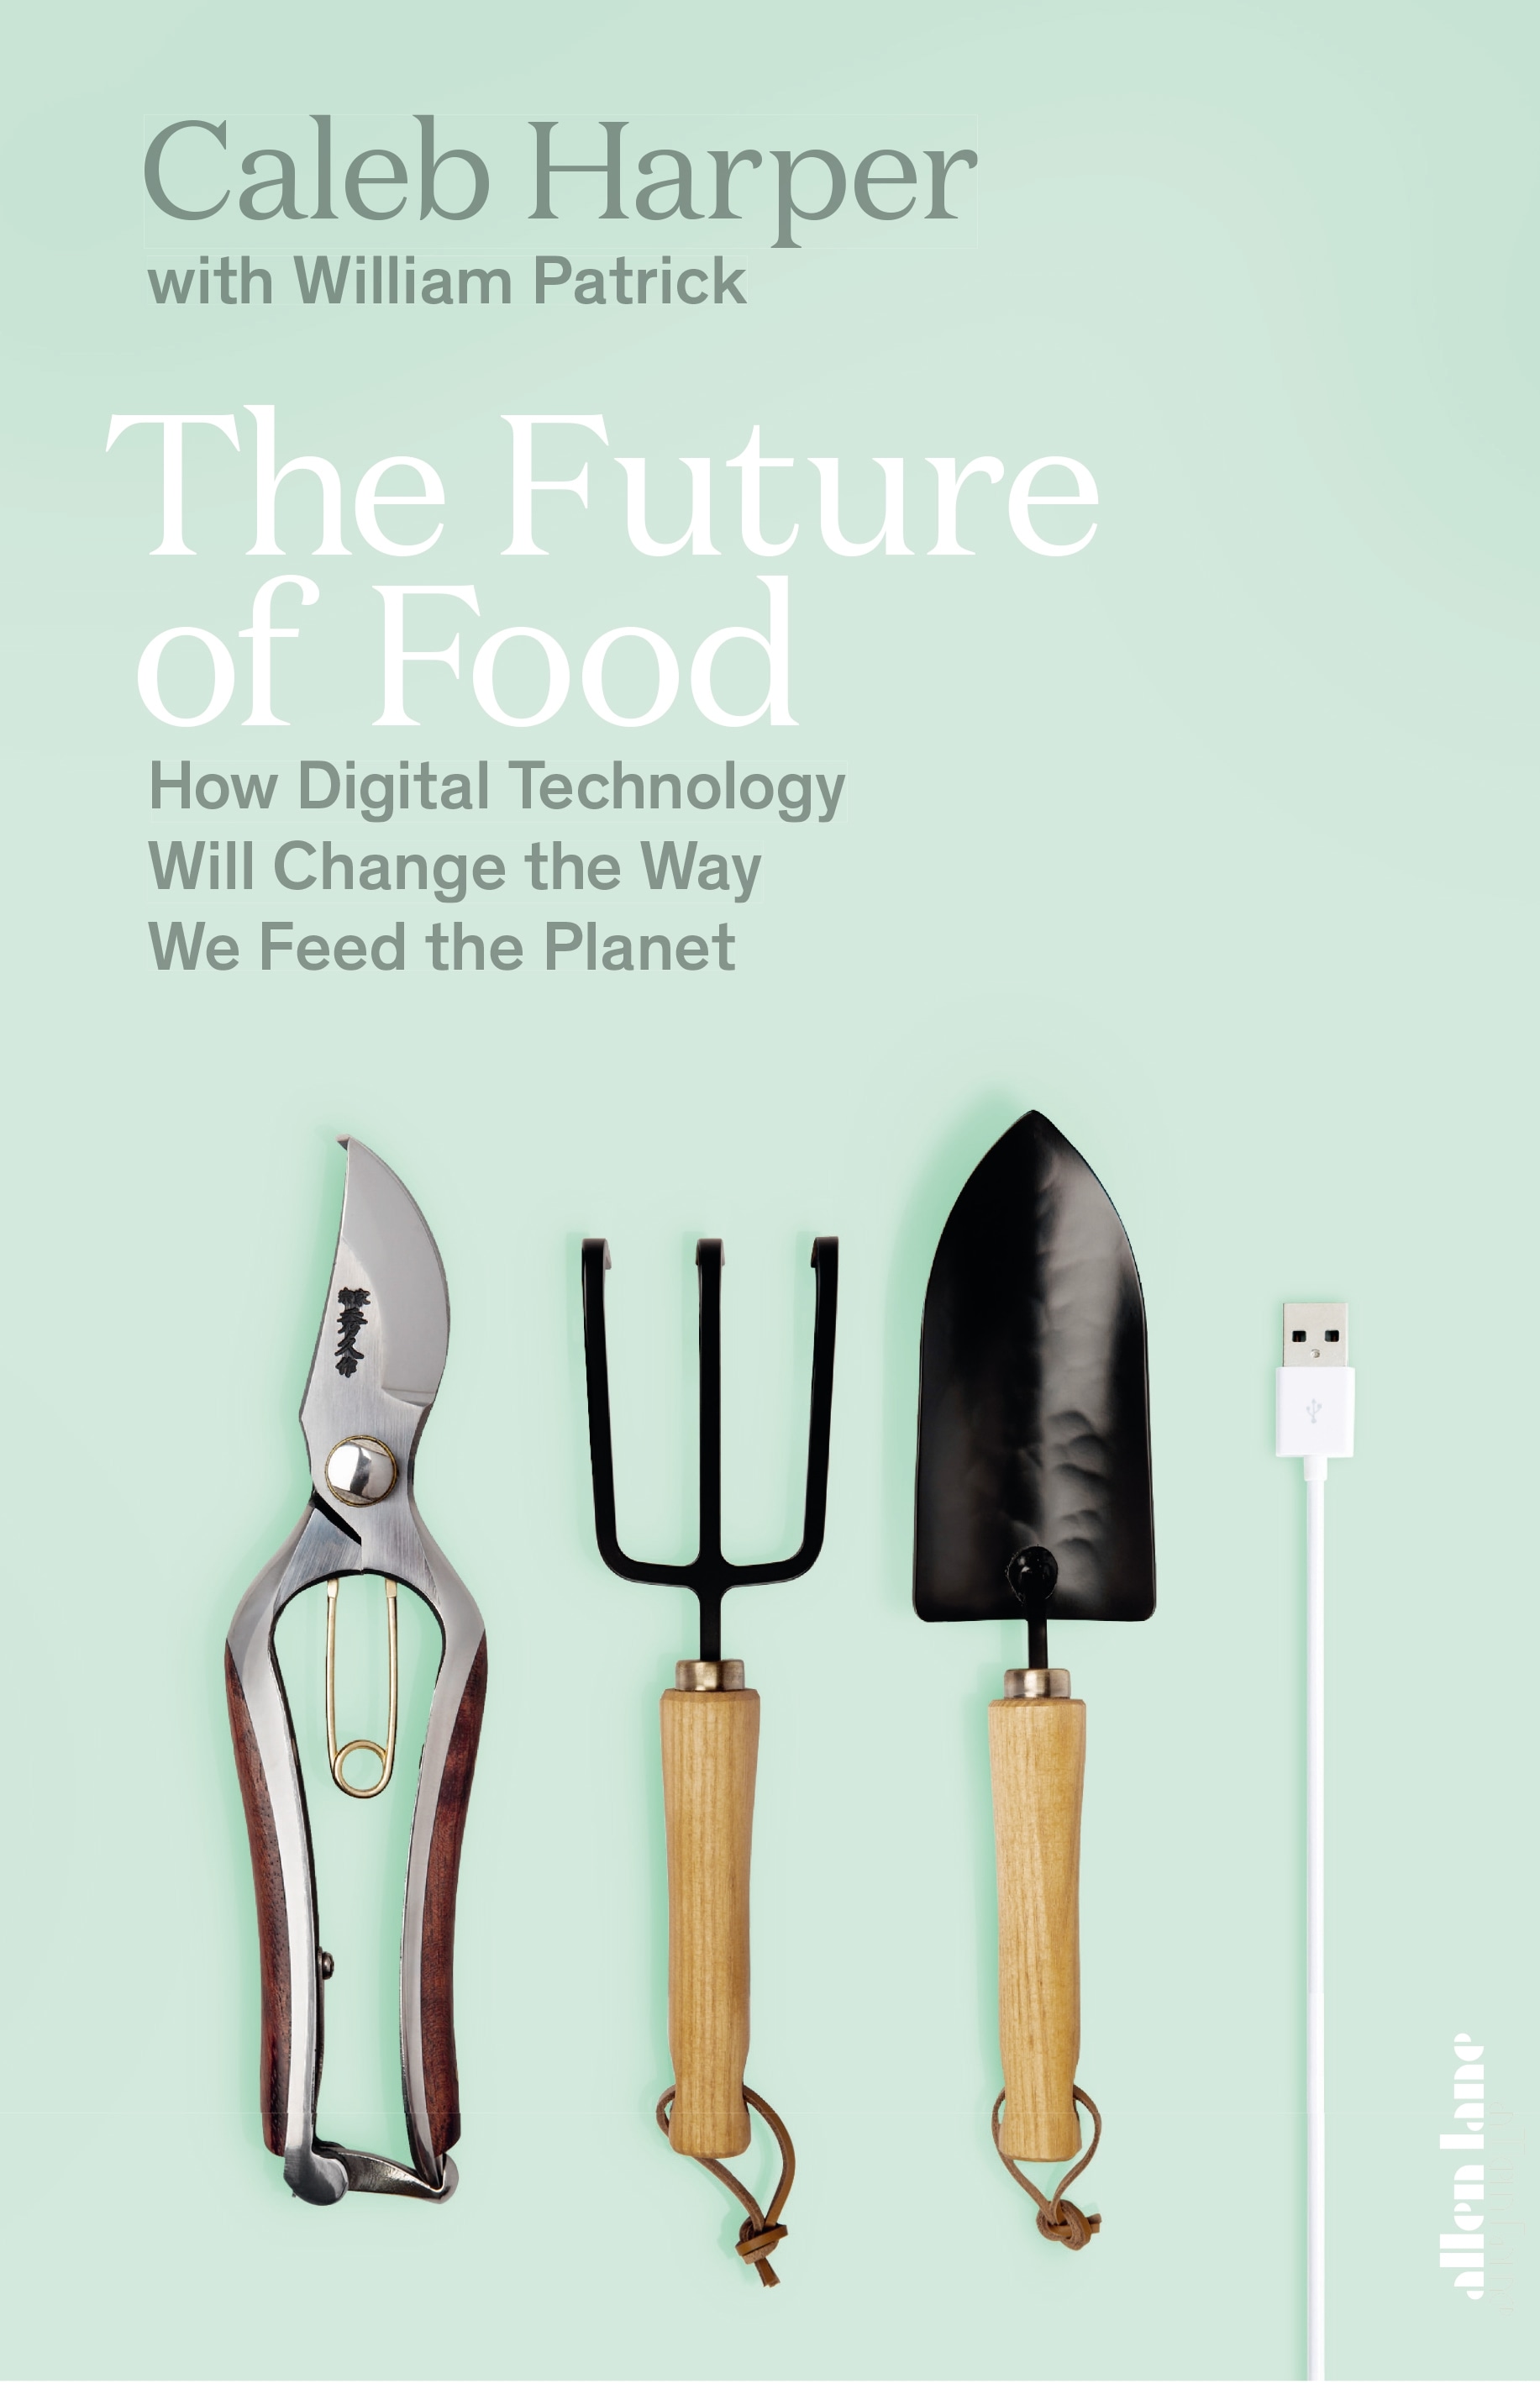 Book “The Future of Food” by Caleb Harper — November 26, 2020